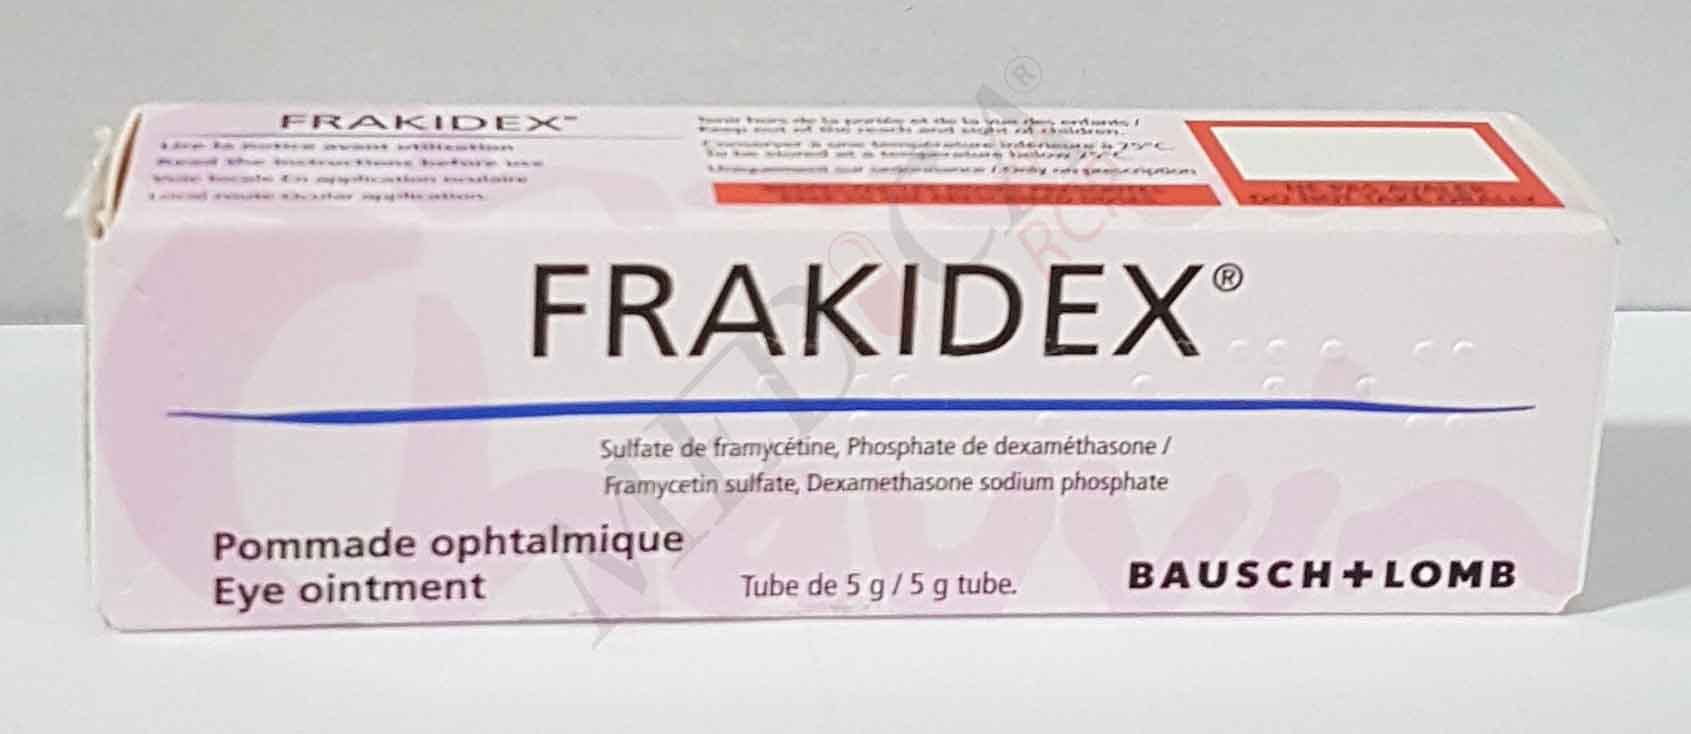 Frakidex Pommade ophtalmique